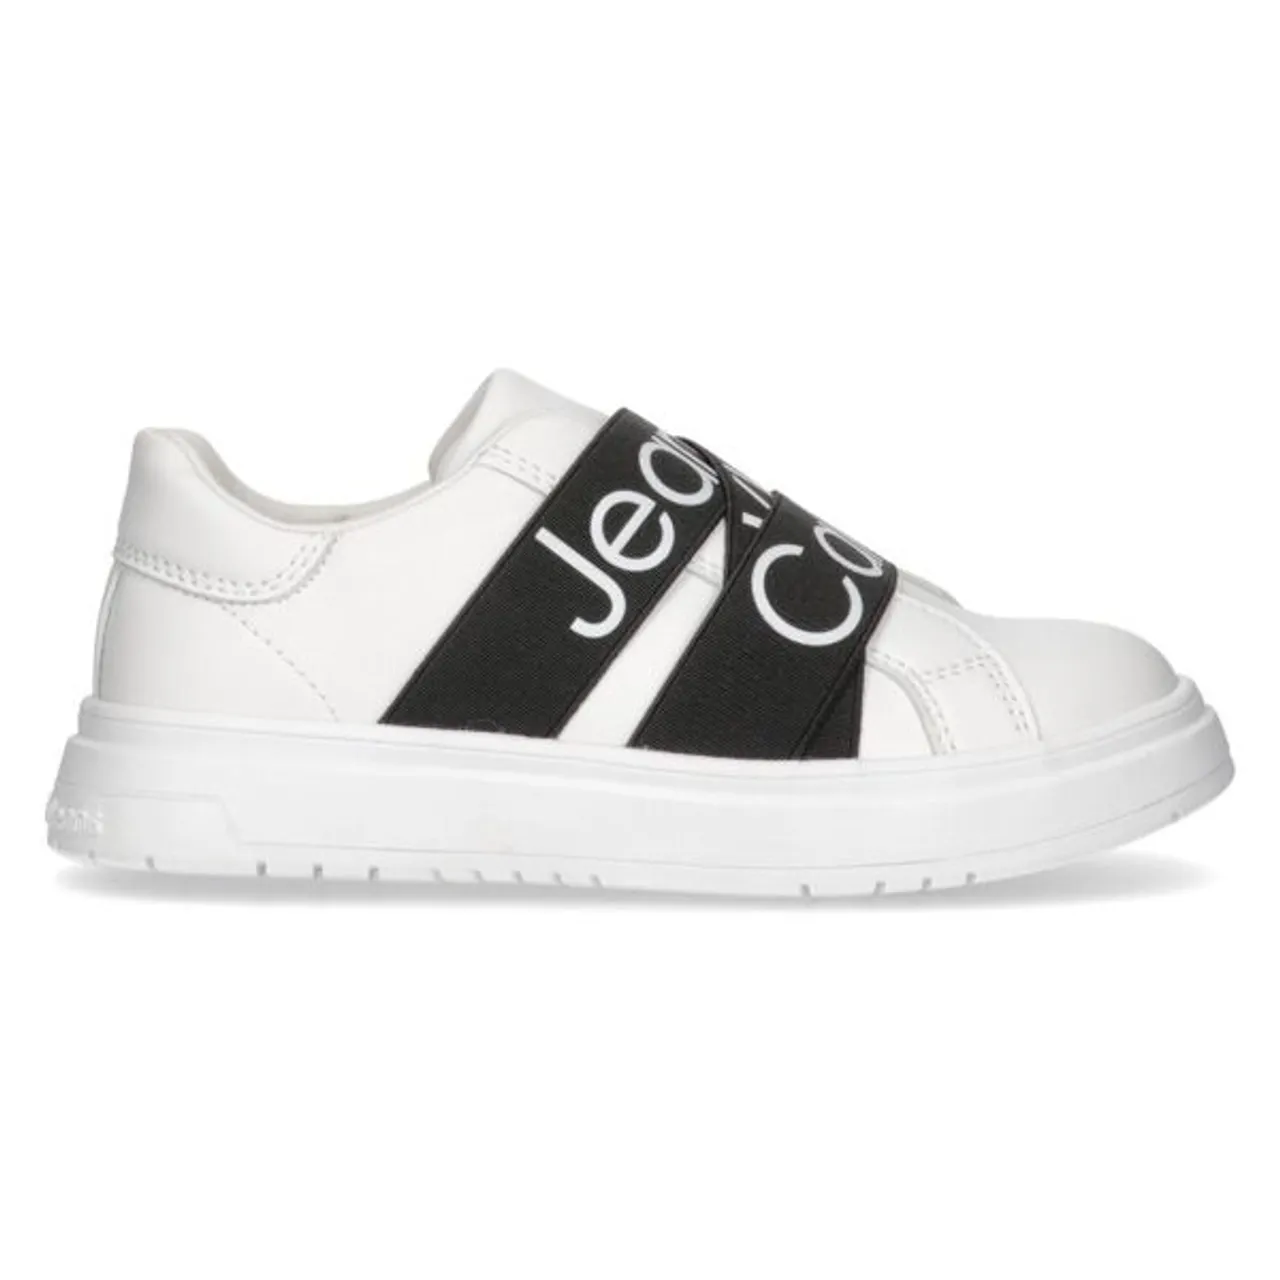 Slip-On Sneaker CALVIN KLEIN JEANS "LOW CUT SNEAKER" Gr. 37, schwarz-weiß (weiß, schwarz) Kinder Schuhe Sneaker